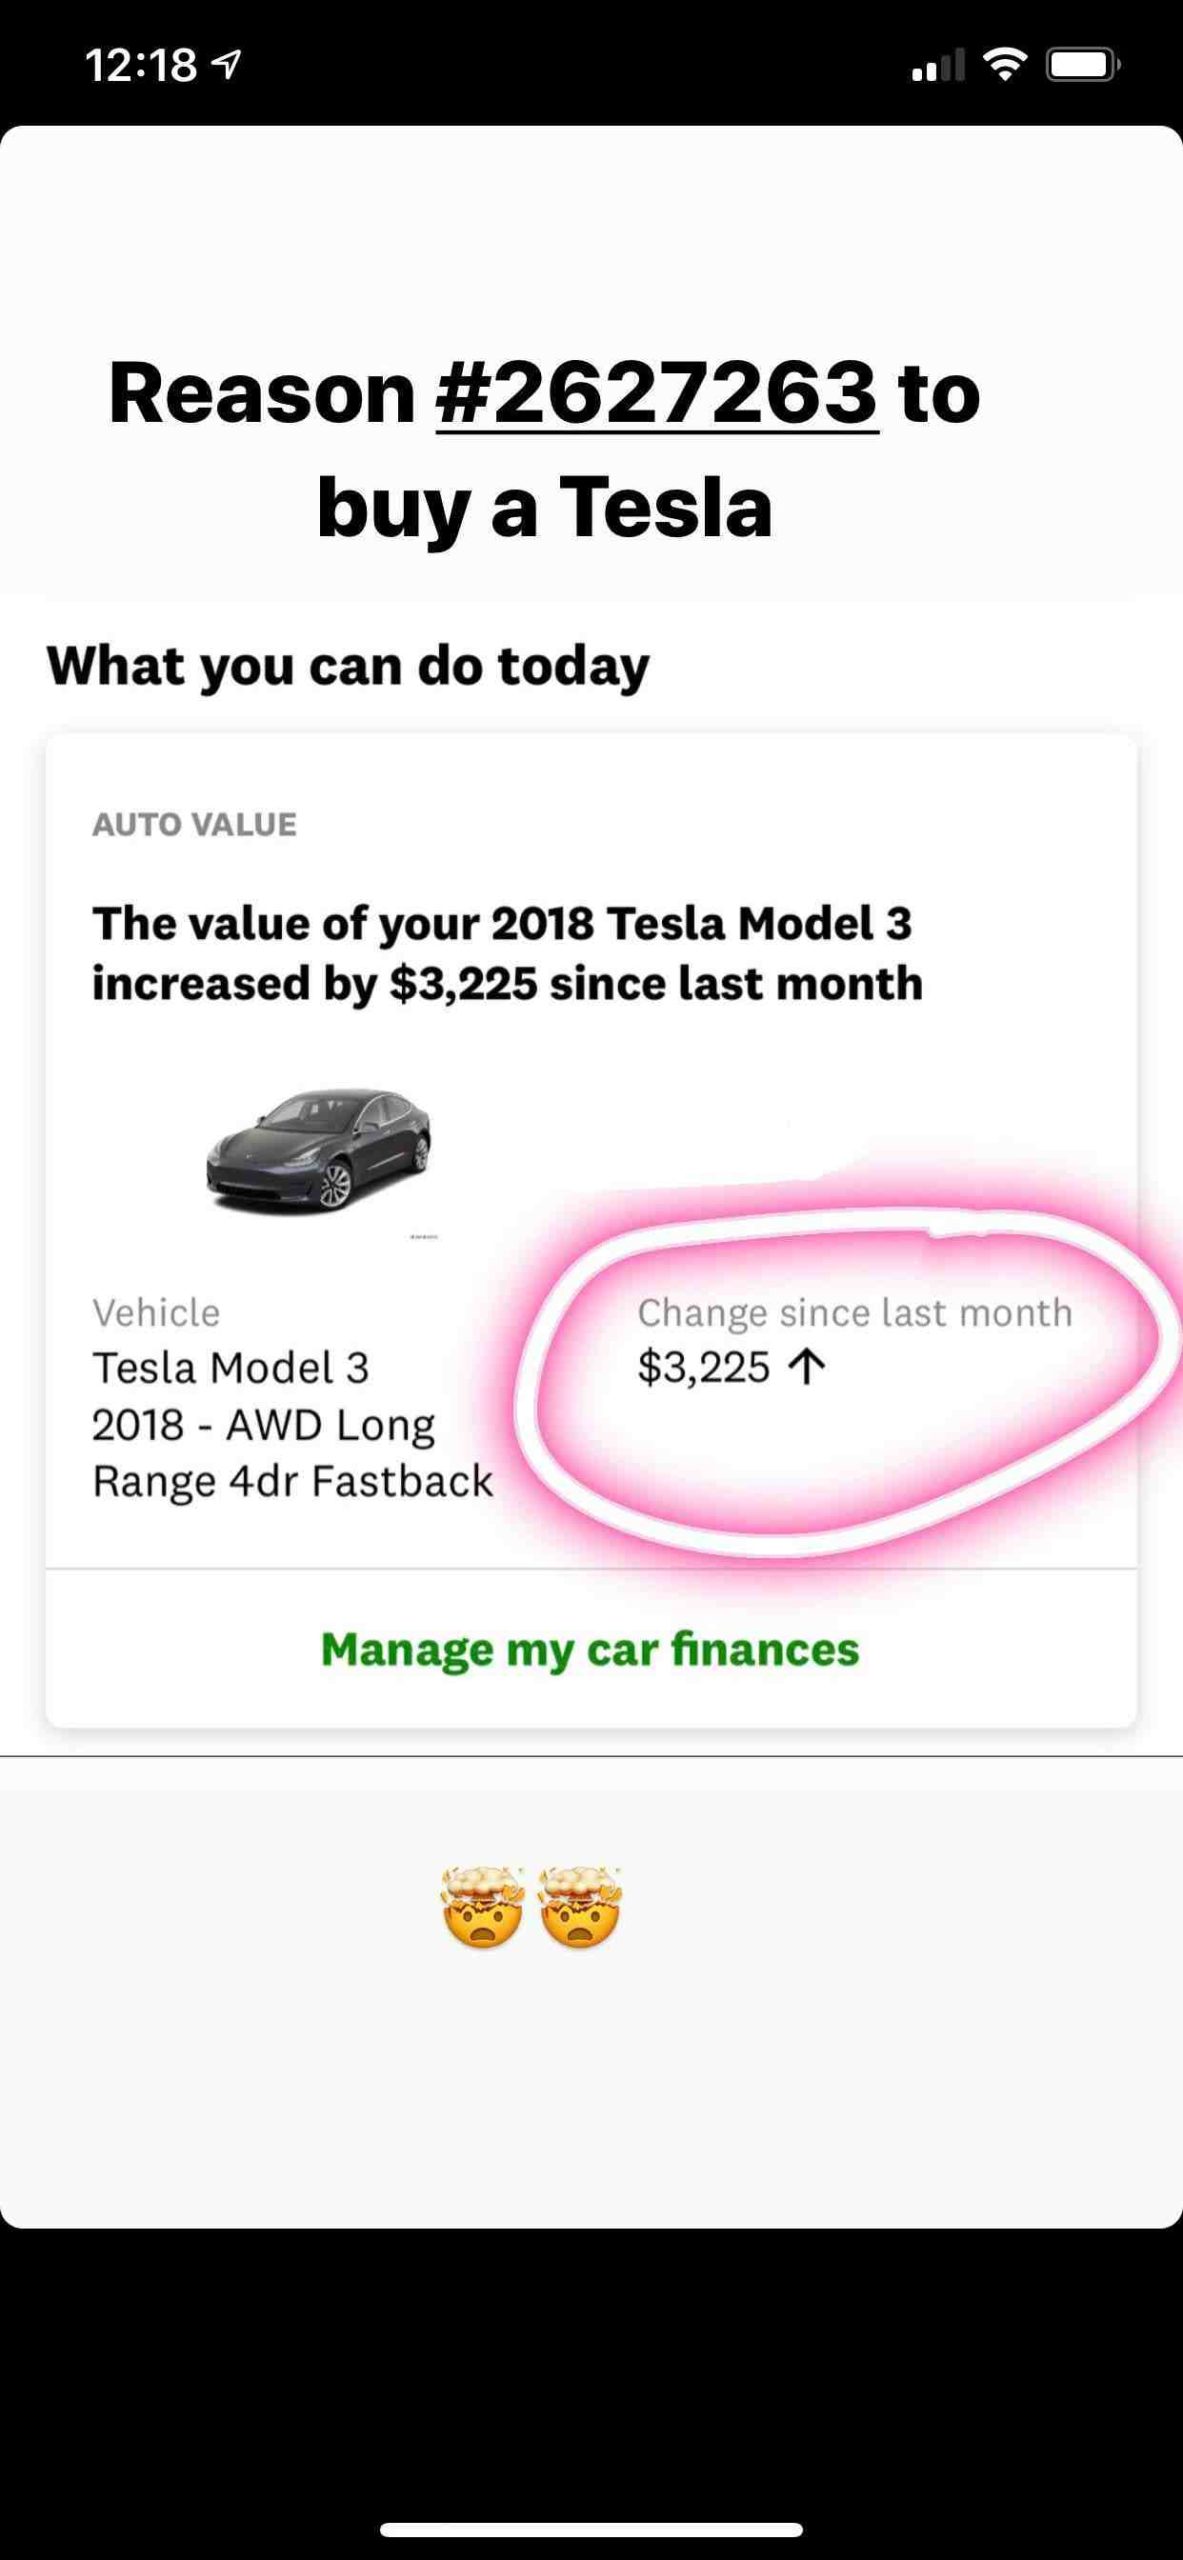 Is a Tesla a good family car?